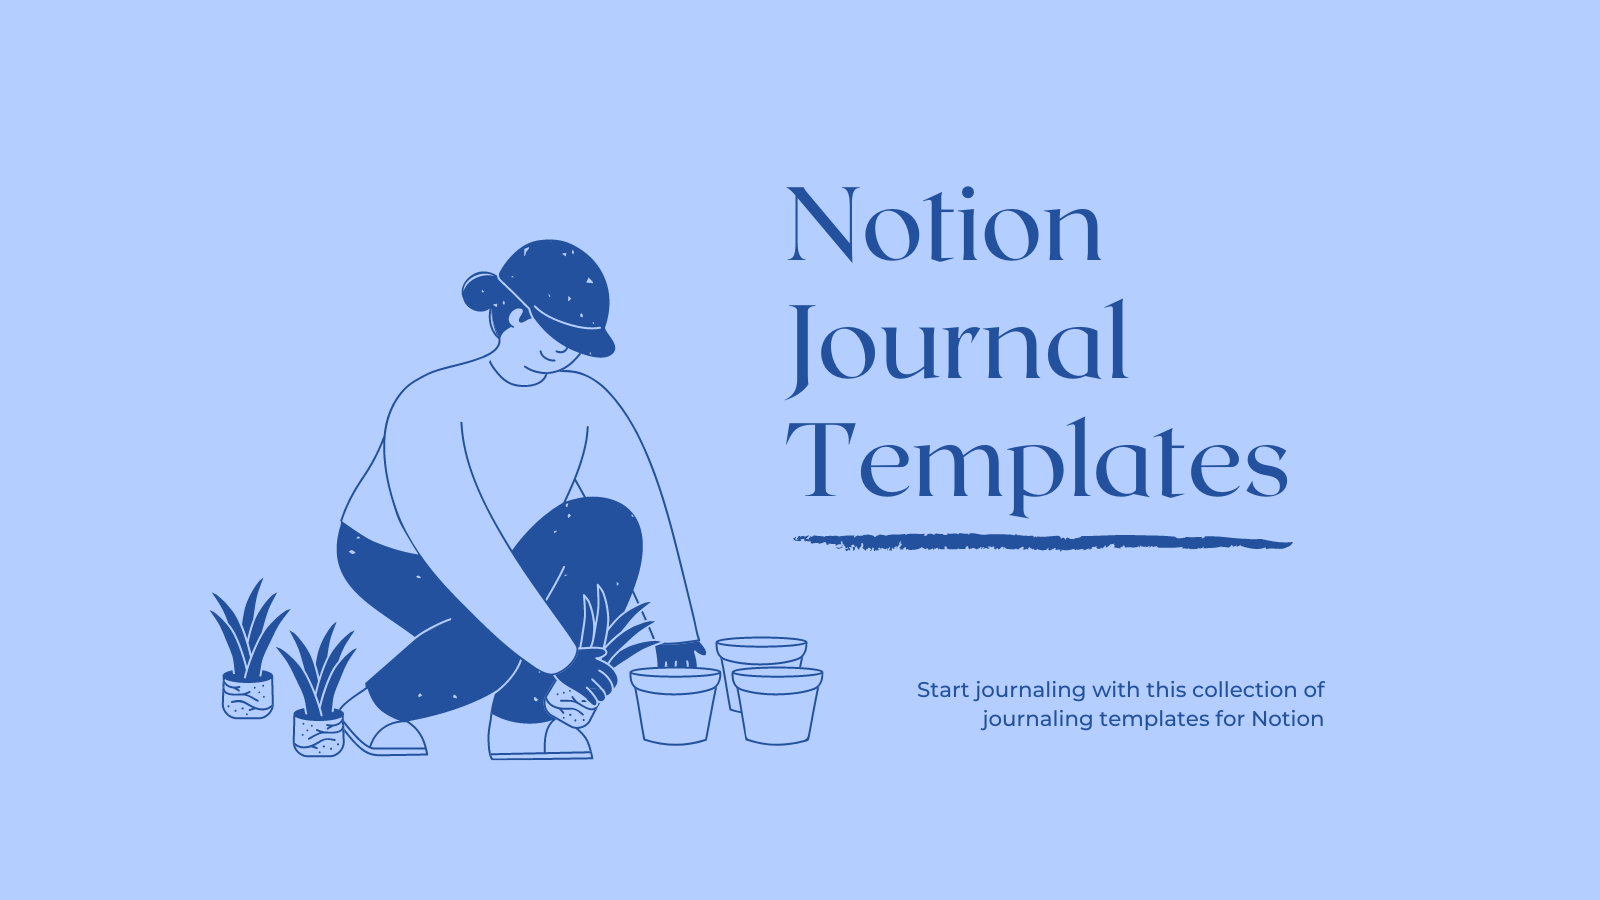 Notion Journal Templates Header Image